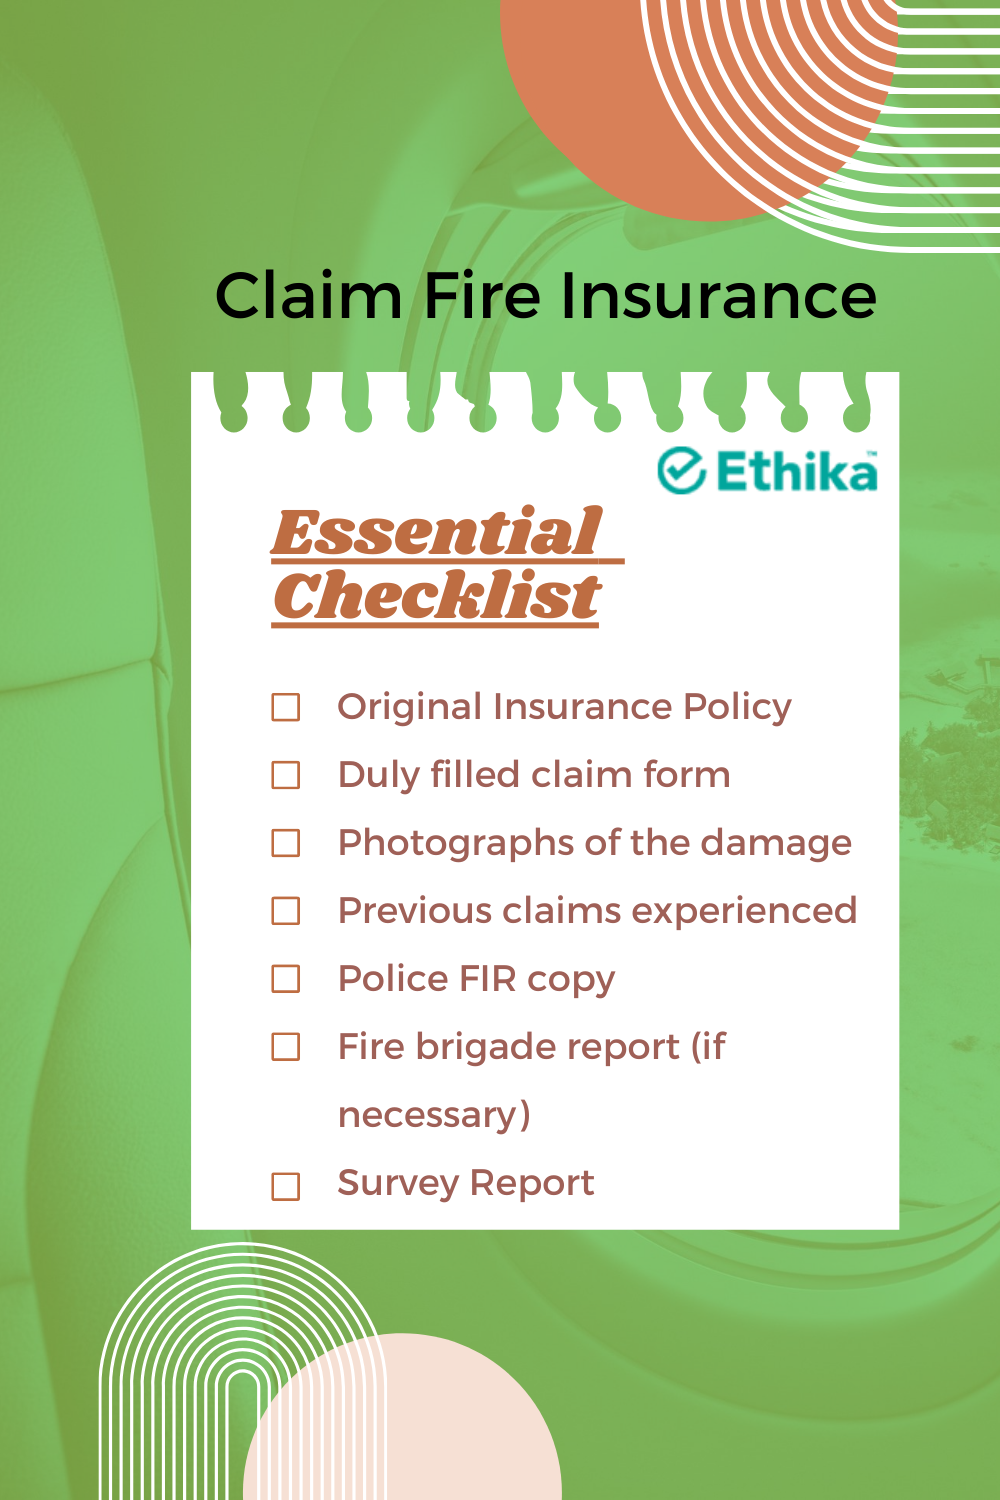 Checklist - Fire Insurance Claim